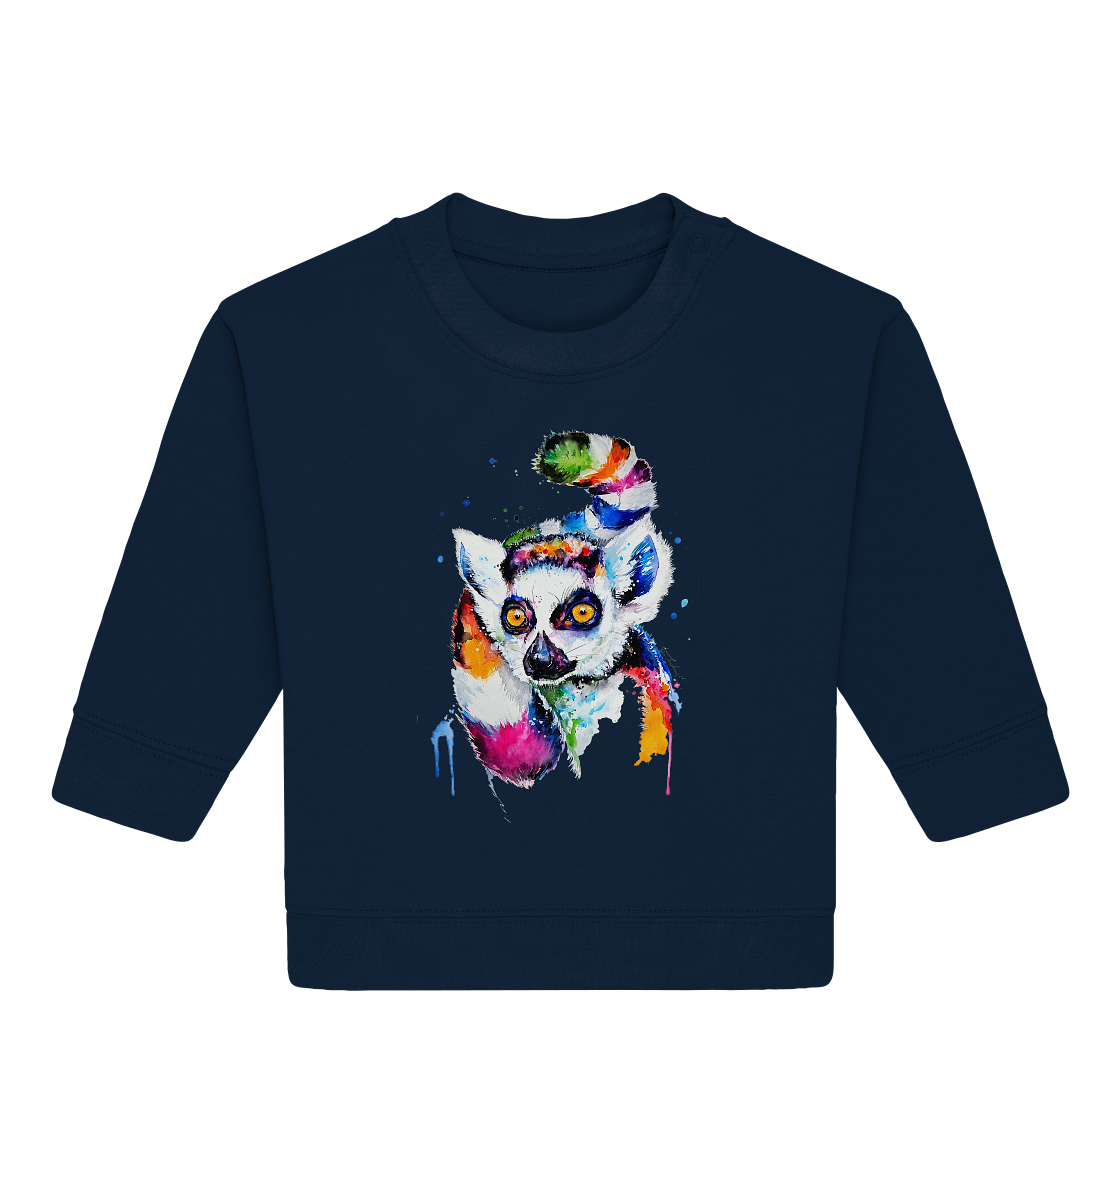 Bunter Katta - Baby Organic Sweatshirt